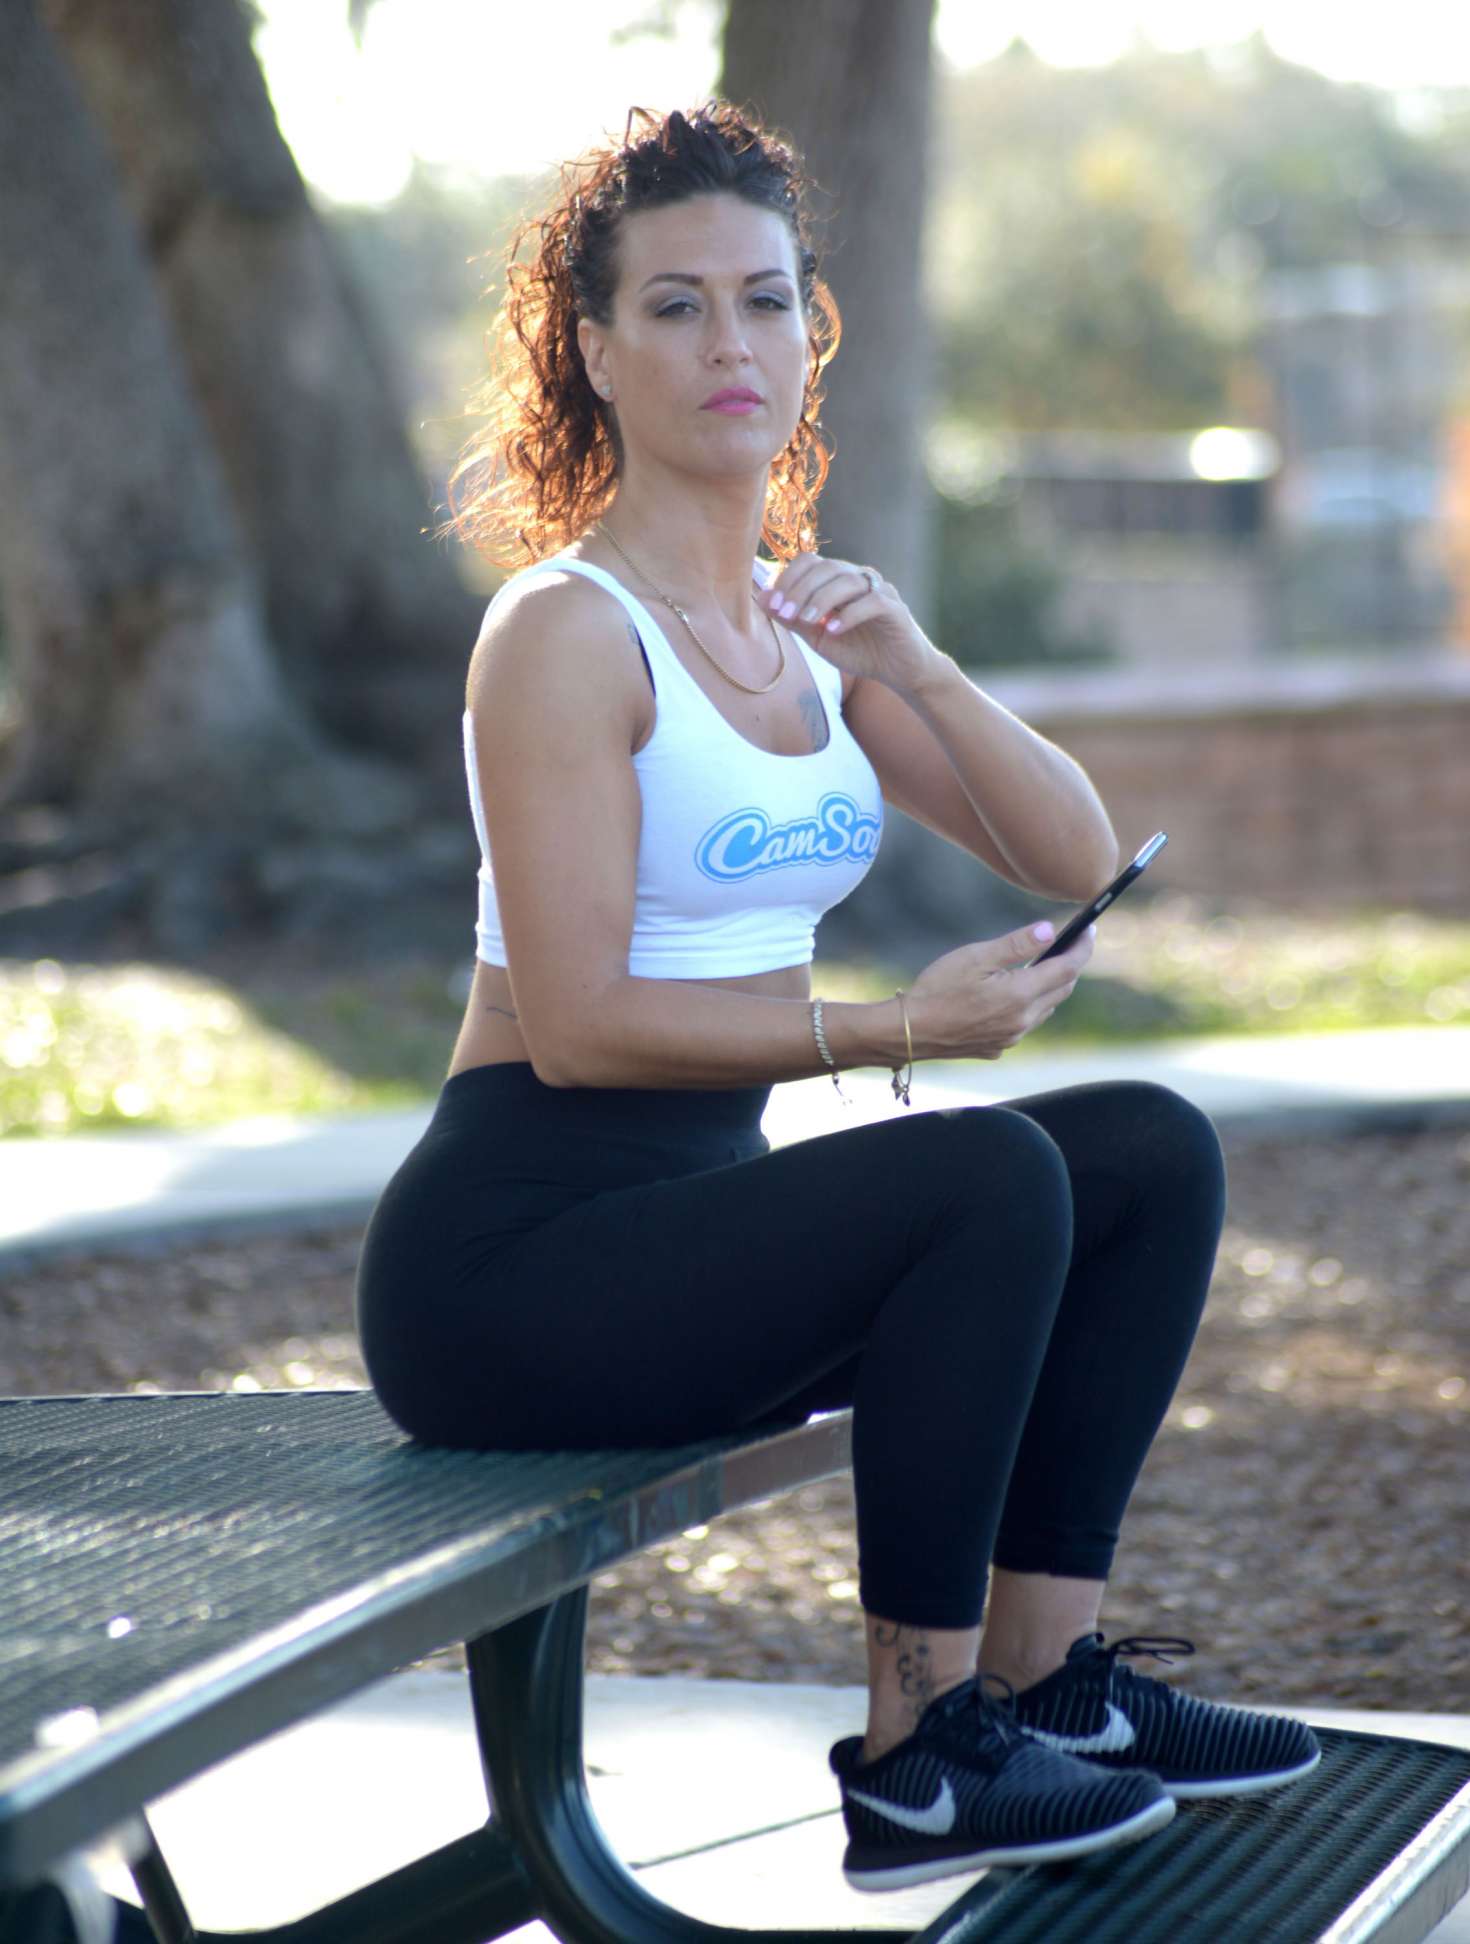 Victoria Banxxx 2017 : Victoria Banxxx in Tights and Sports Bra Doing Yoga ...